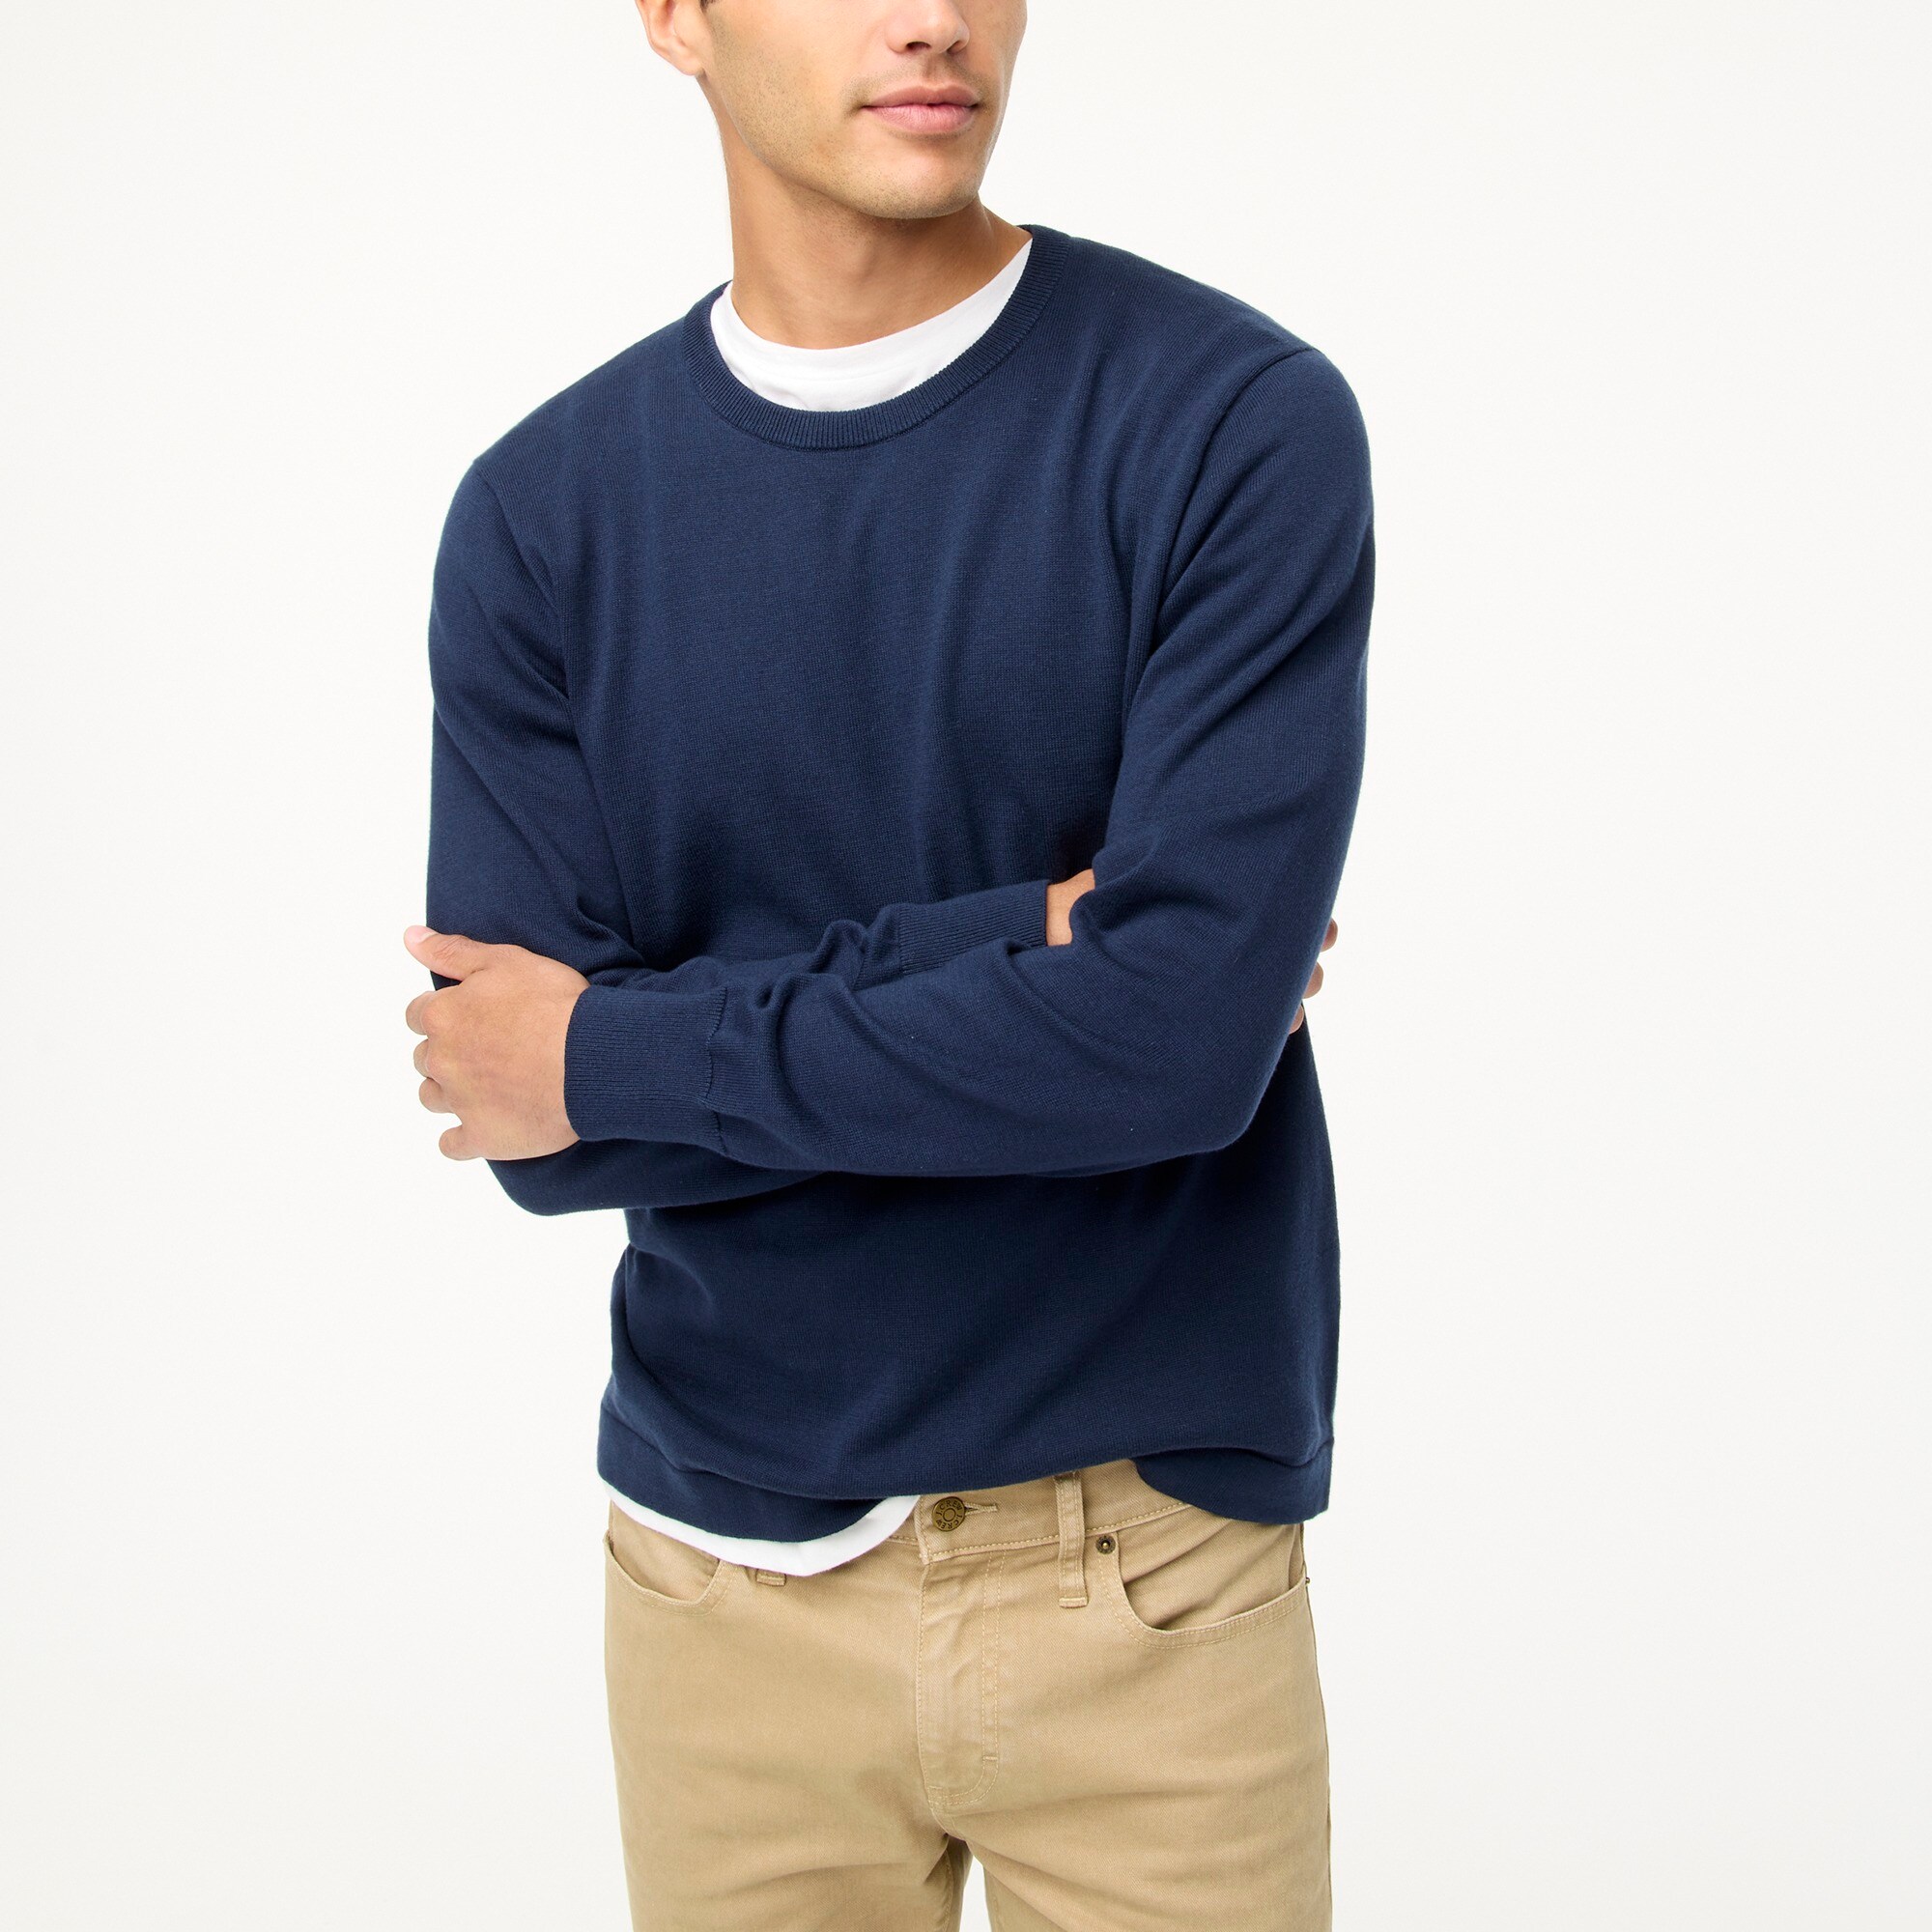 mens Cotton crewneck sweater-tee